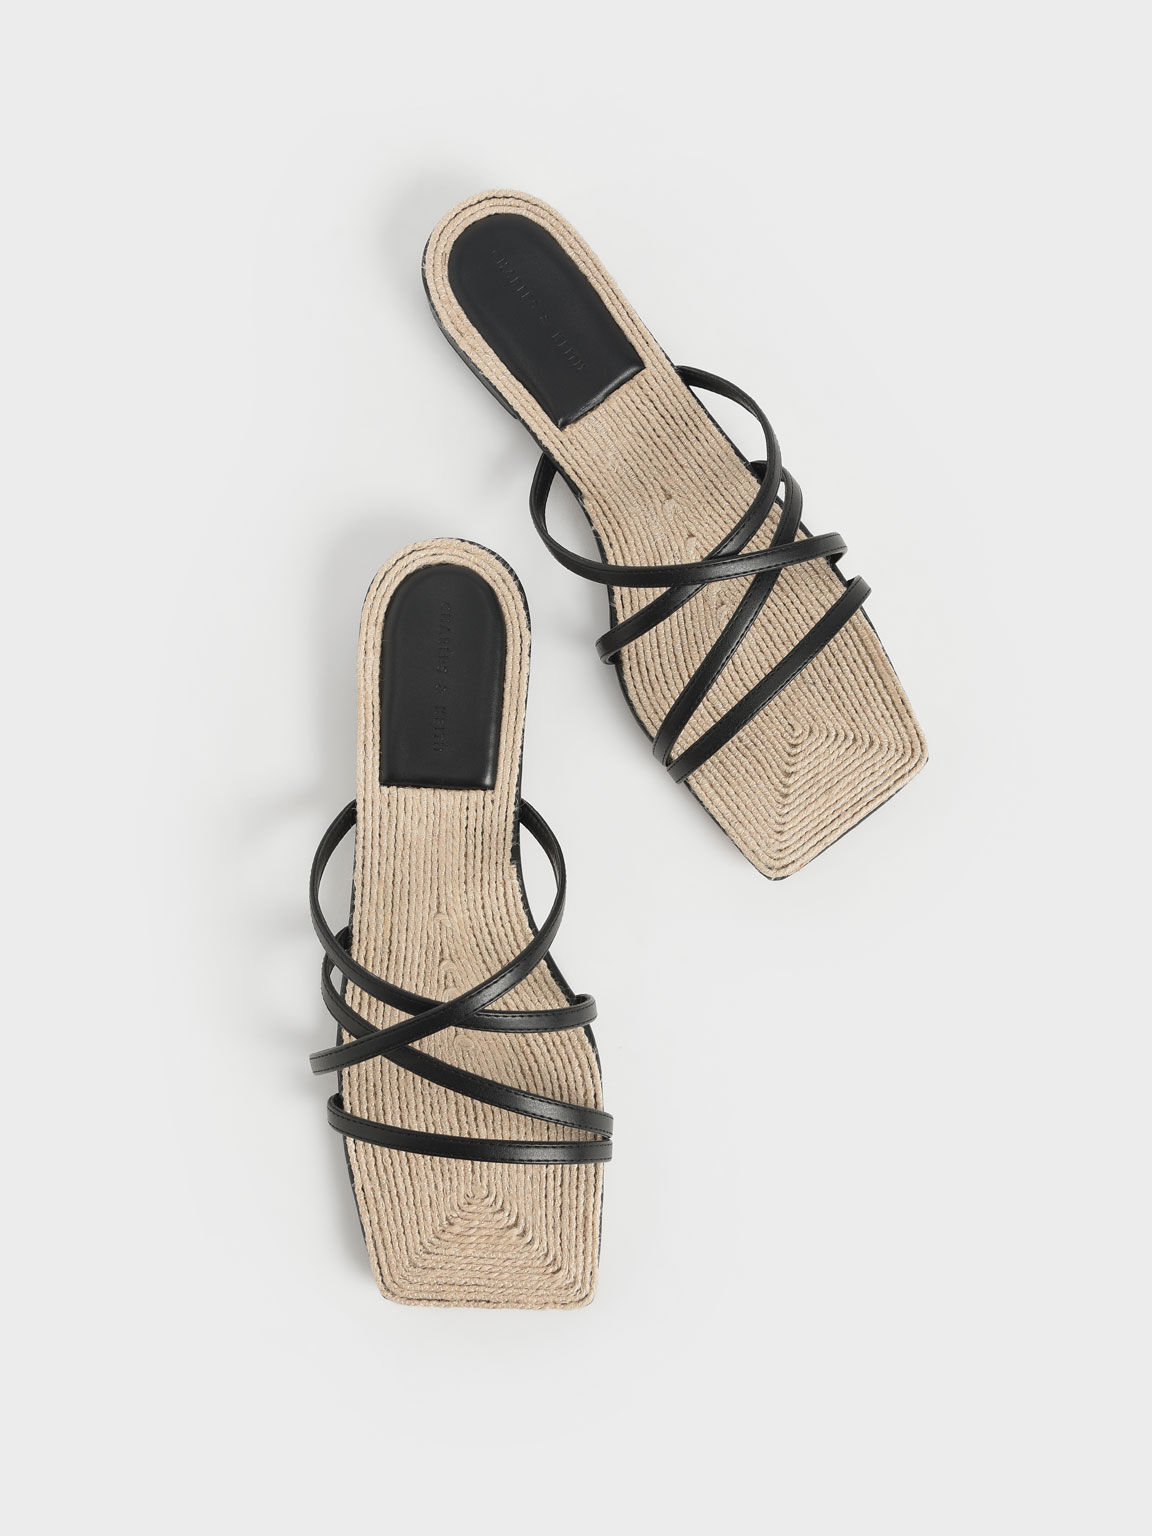 Strappy Square Toe Sandals, Black, hi-res